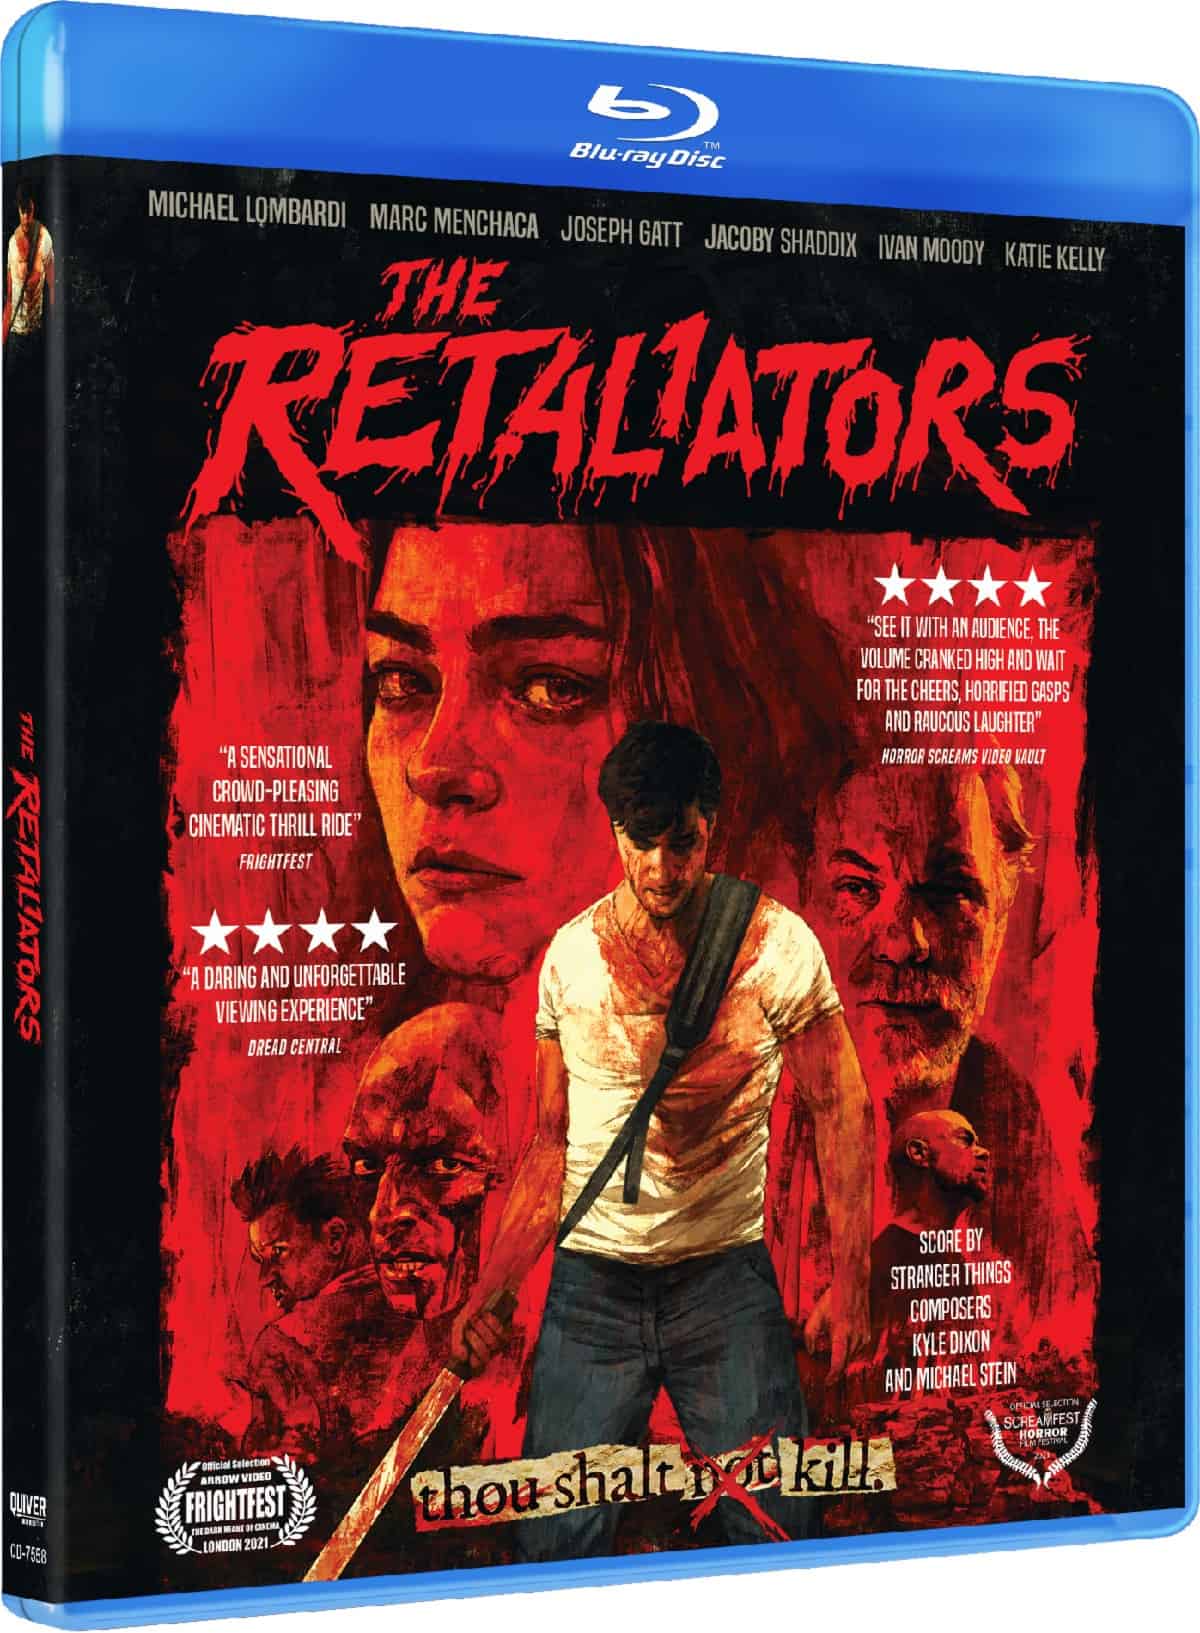 The Retaliators comes to Blu-ray on February 21st 1